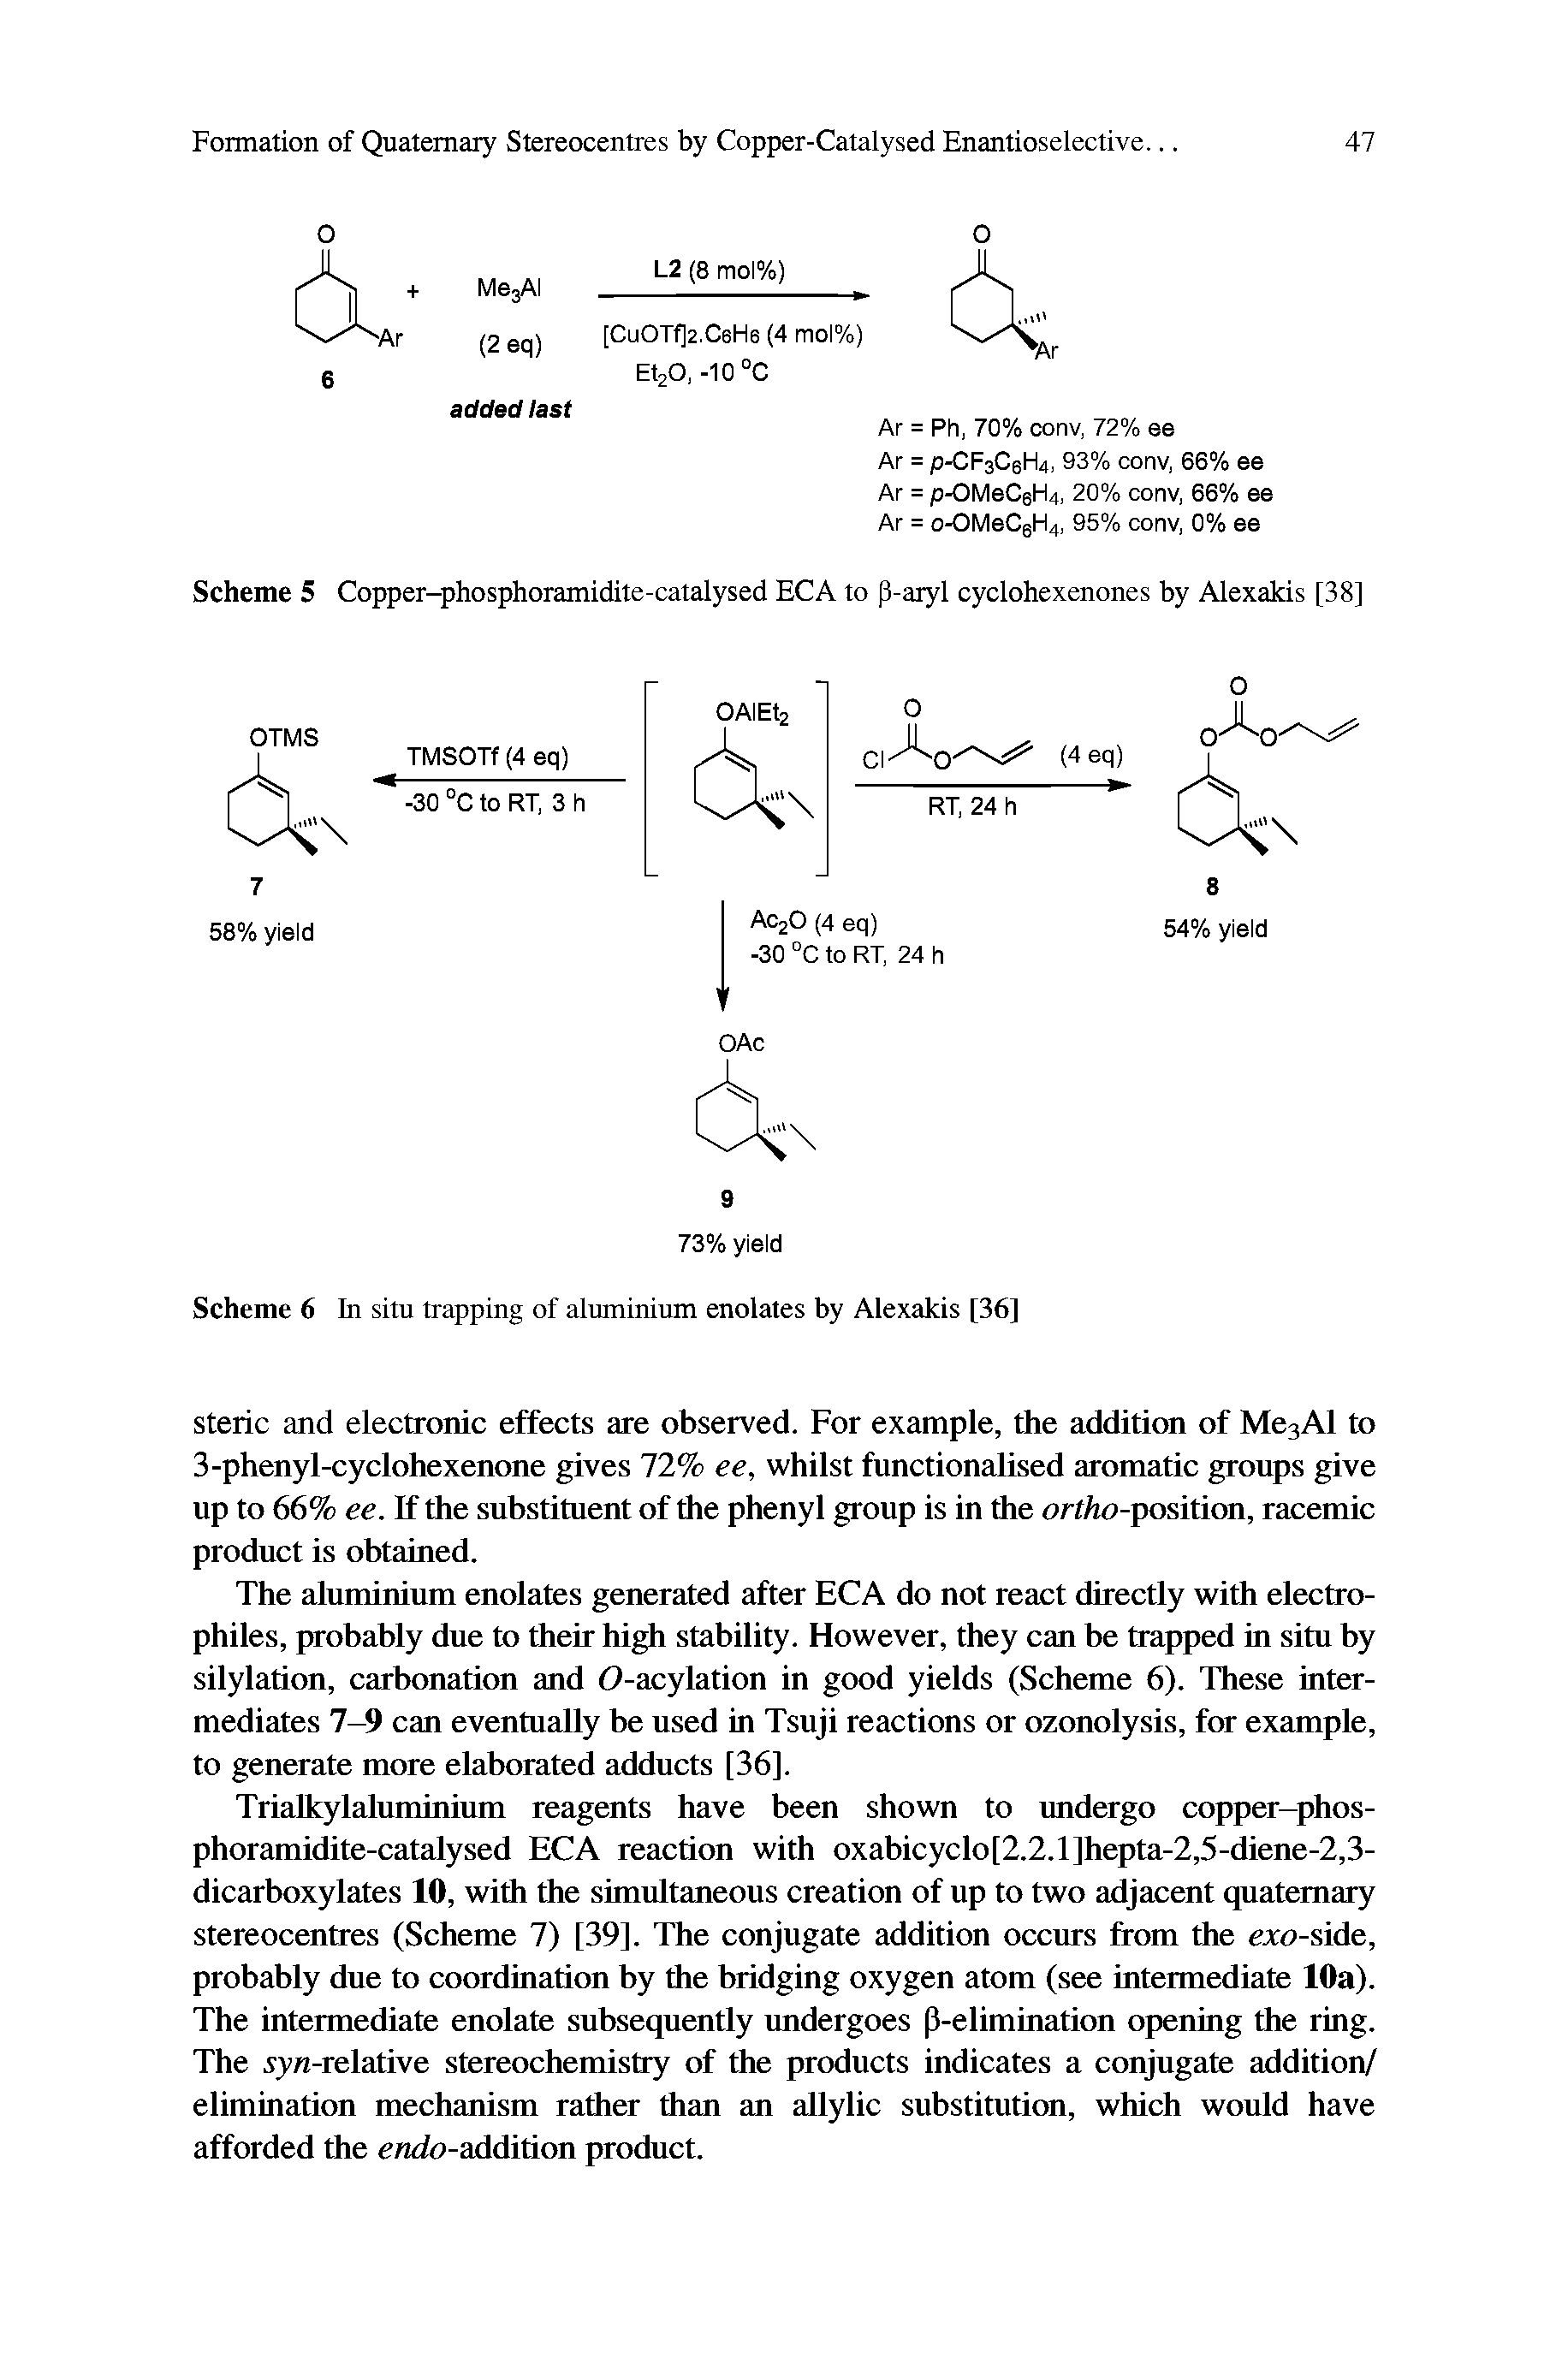 Scheme 5 Copper-phosphoramidite-catalysed EC A to p-aryl cyclohexenones by Alexakis [38]...